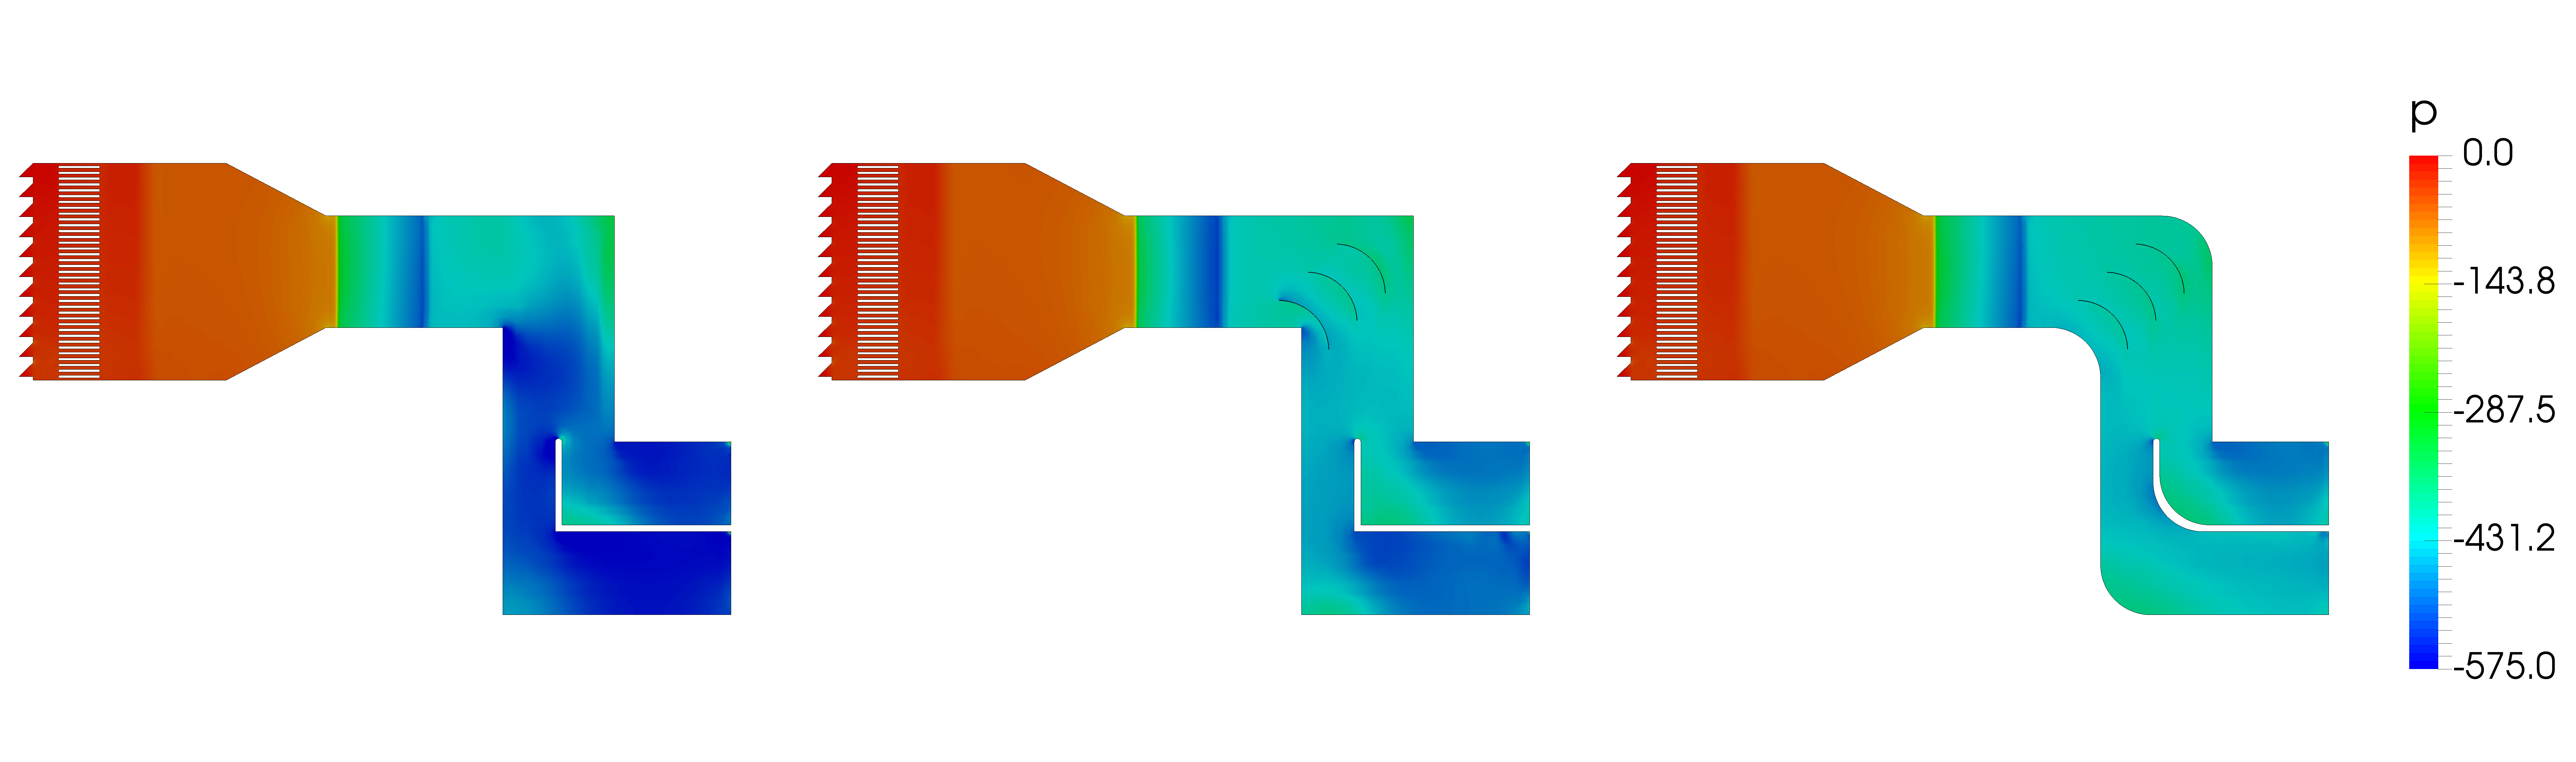 ventilation system design pressure drop cfd simulation